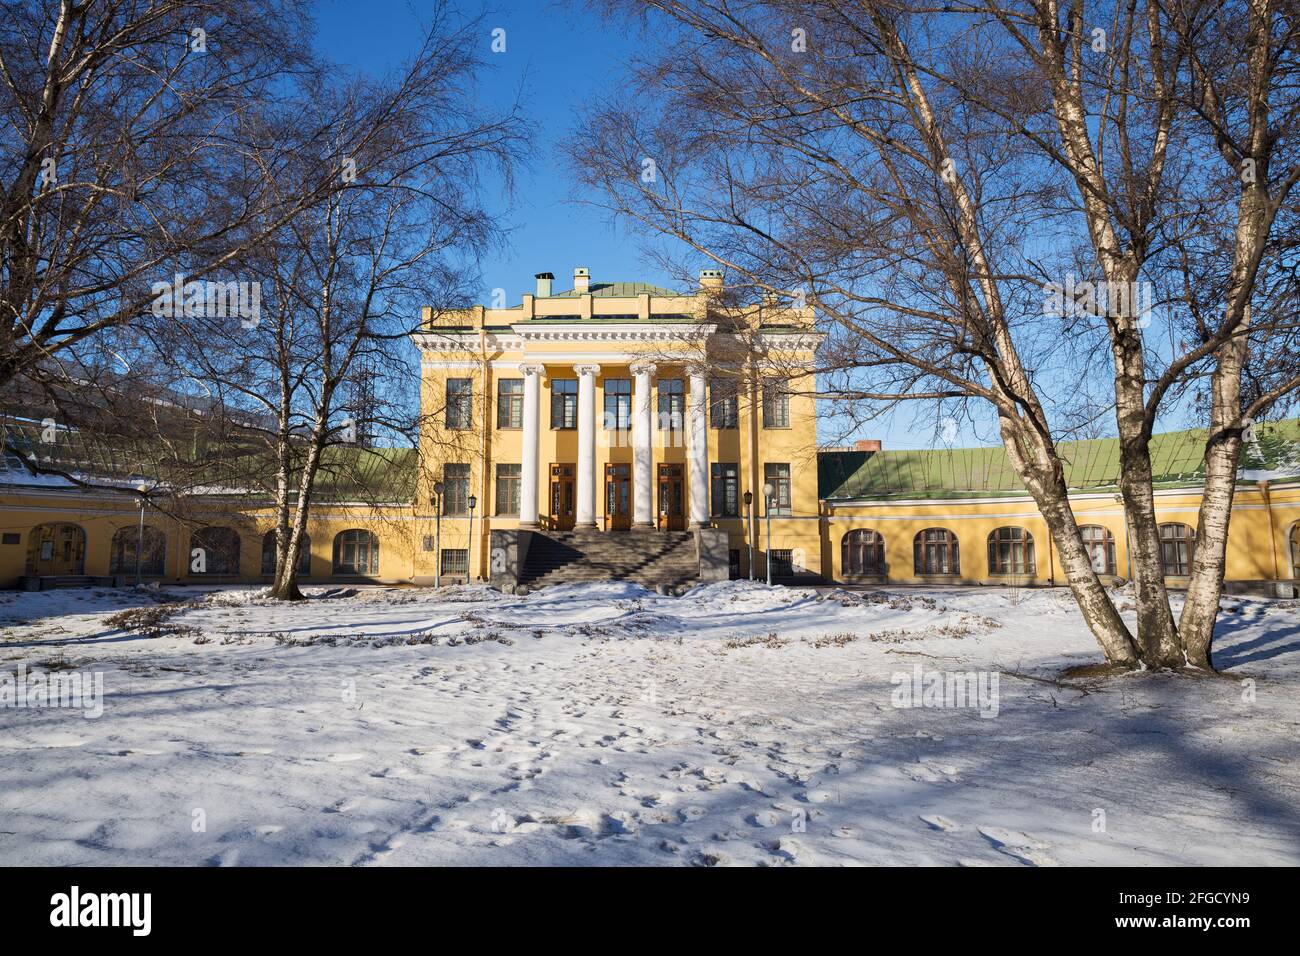 Kiryanovo manor, dacha of Princess Vorontsova-Dashkova, built in 1783. Now the registry office of the Kirovsky district in St. Petersburg, Russia Stock Photo